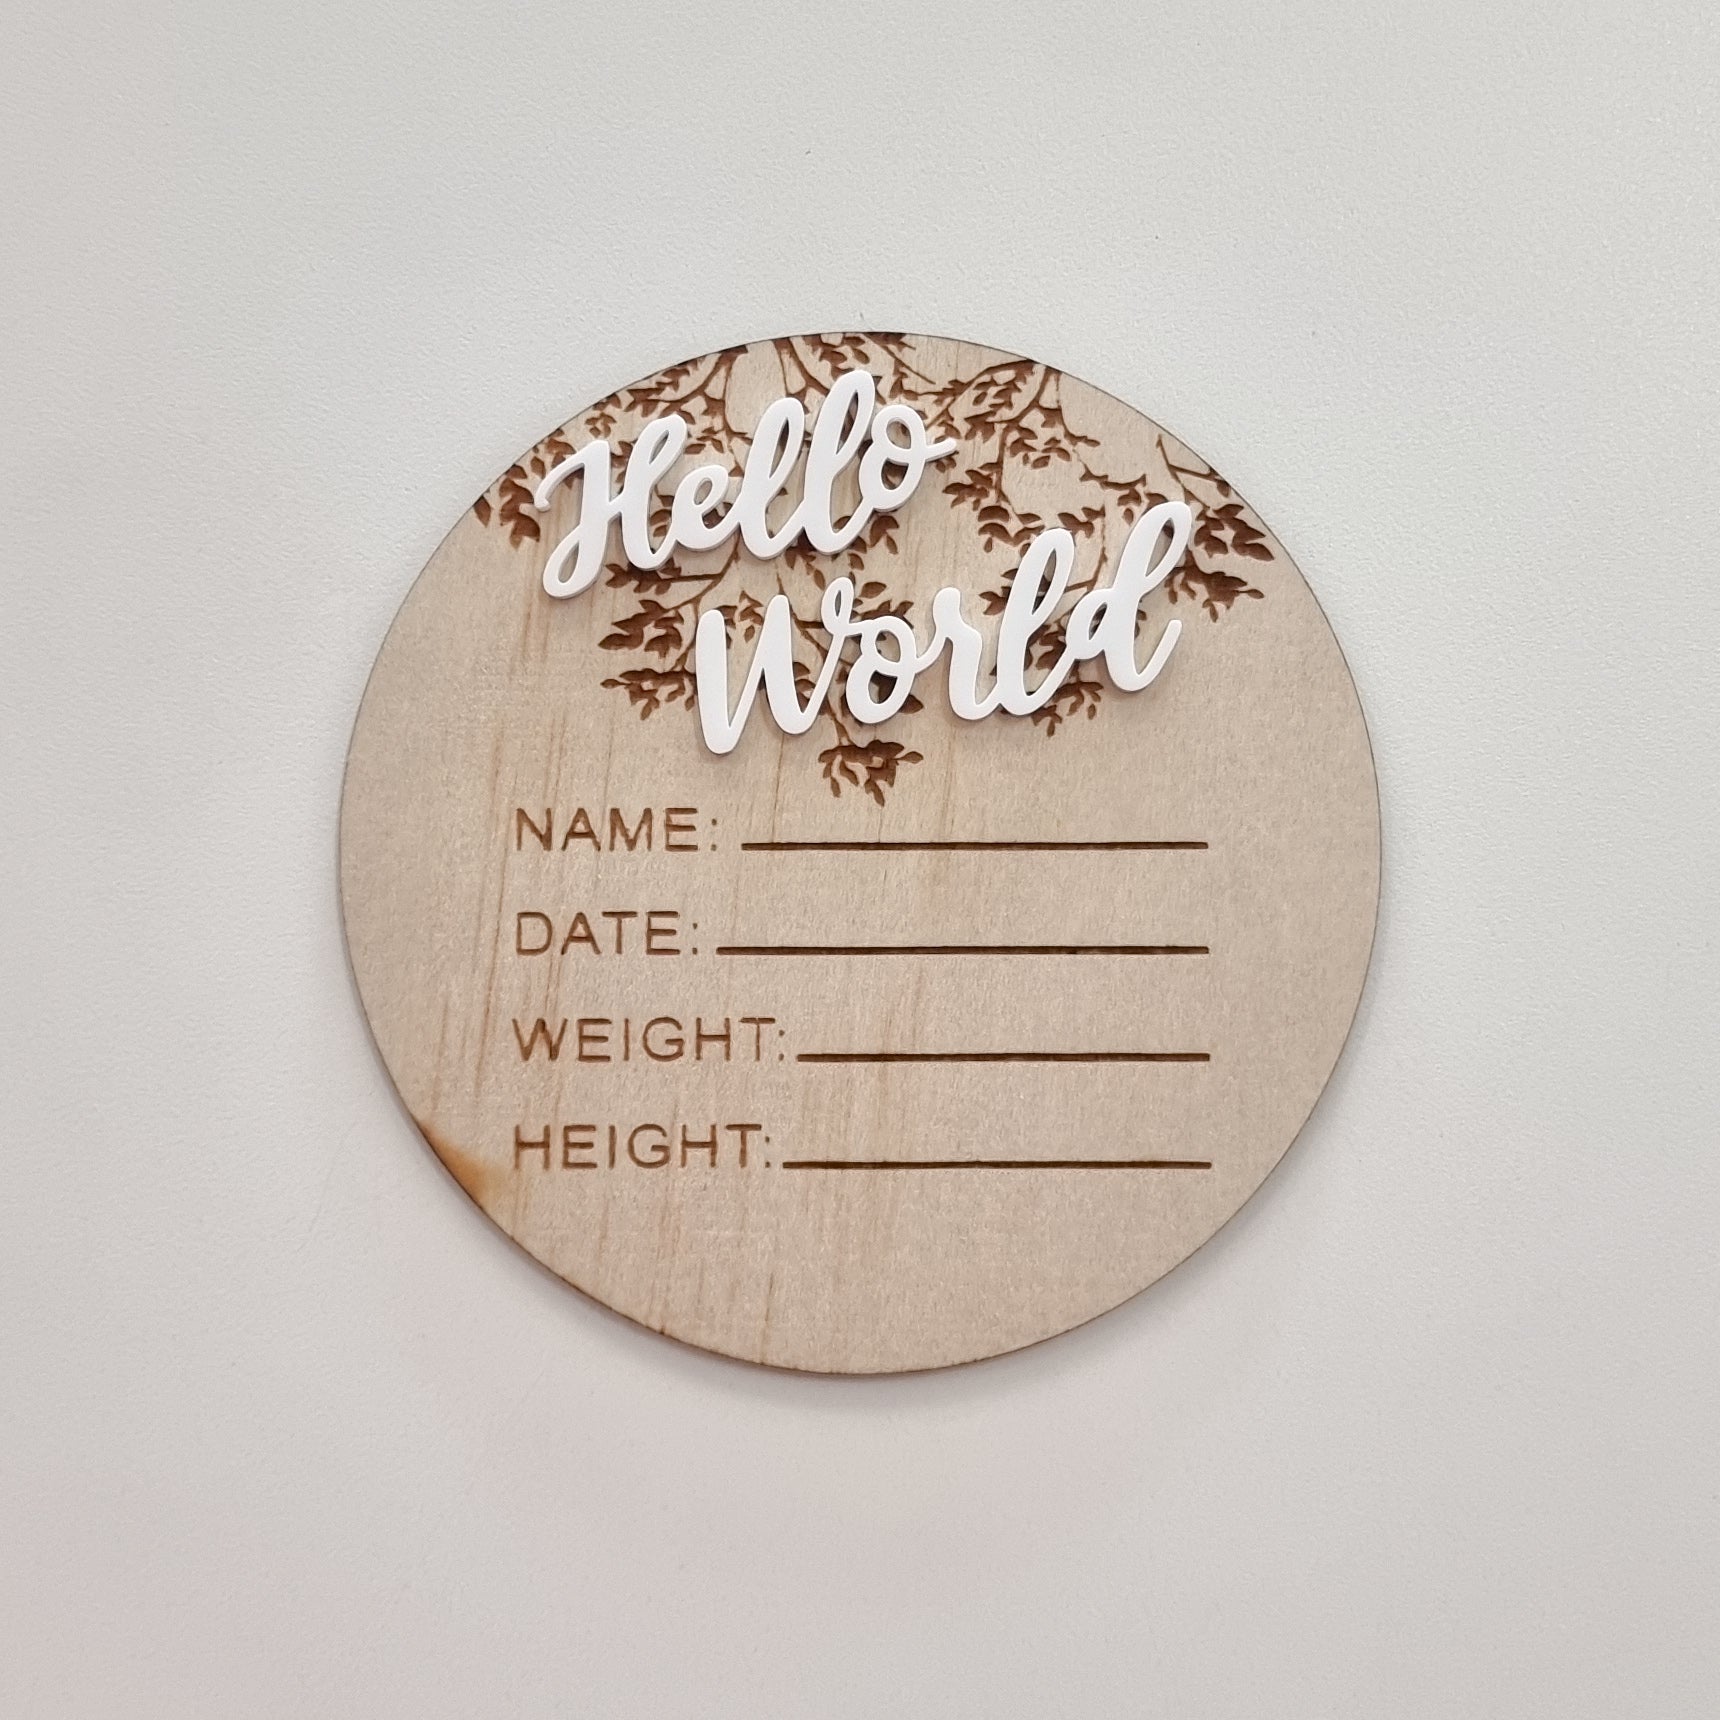 “Hello world” Acrylic announcement plaque - White